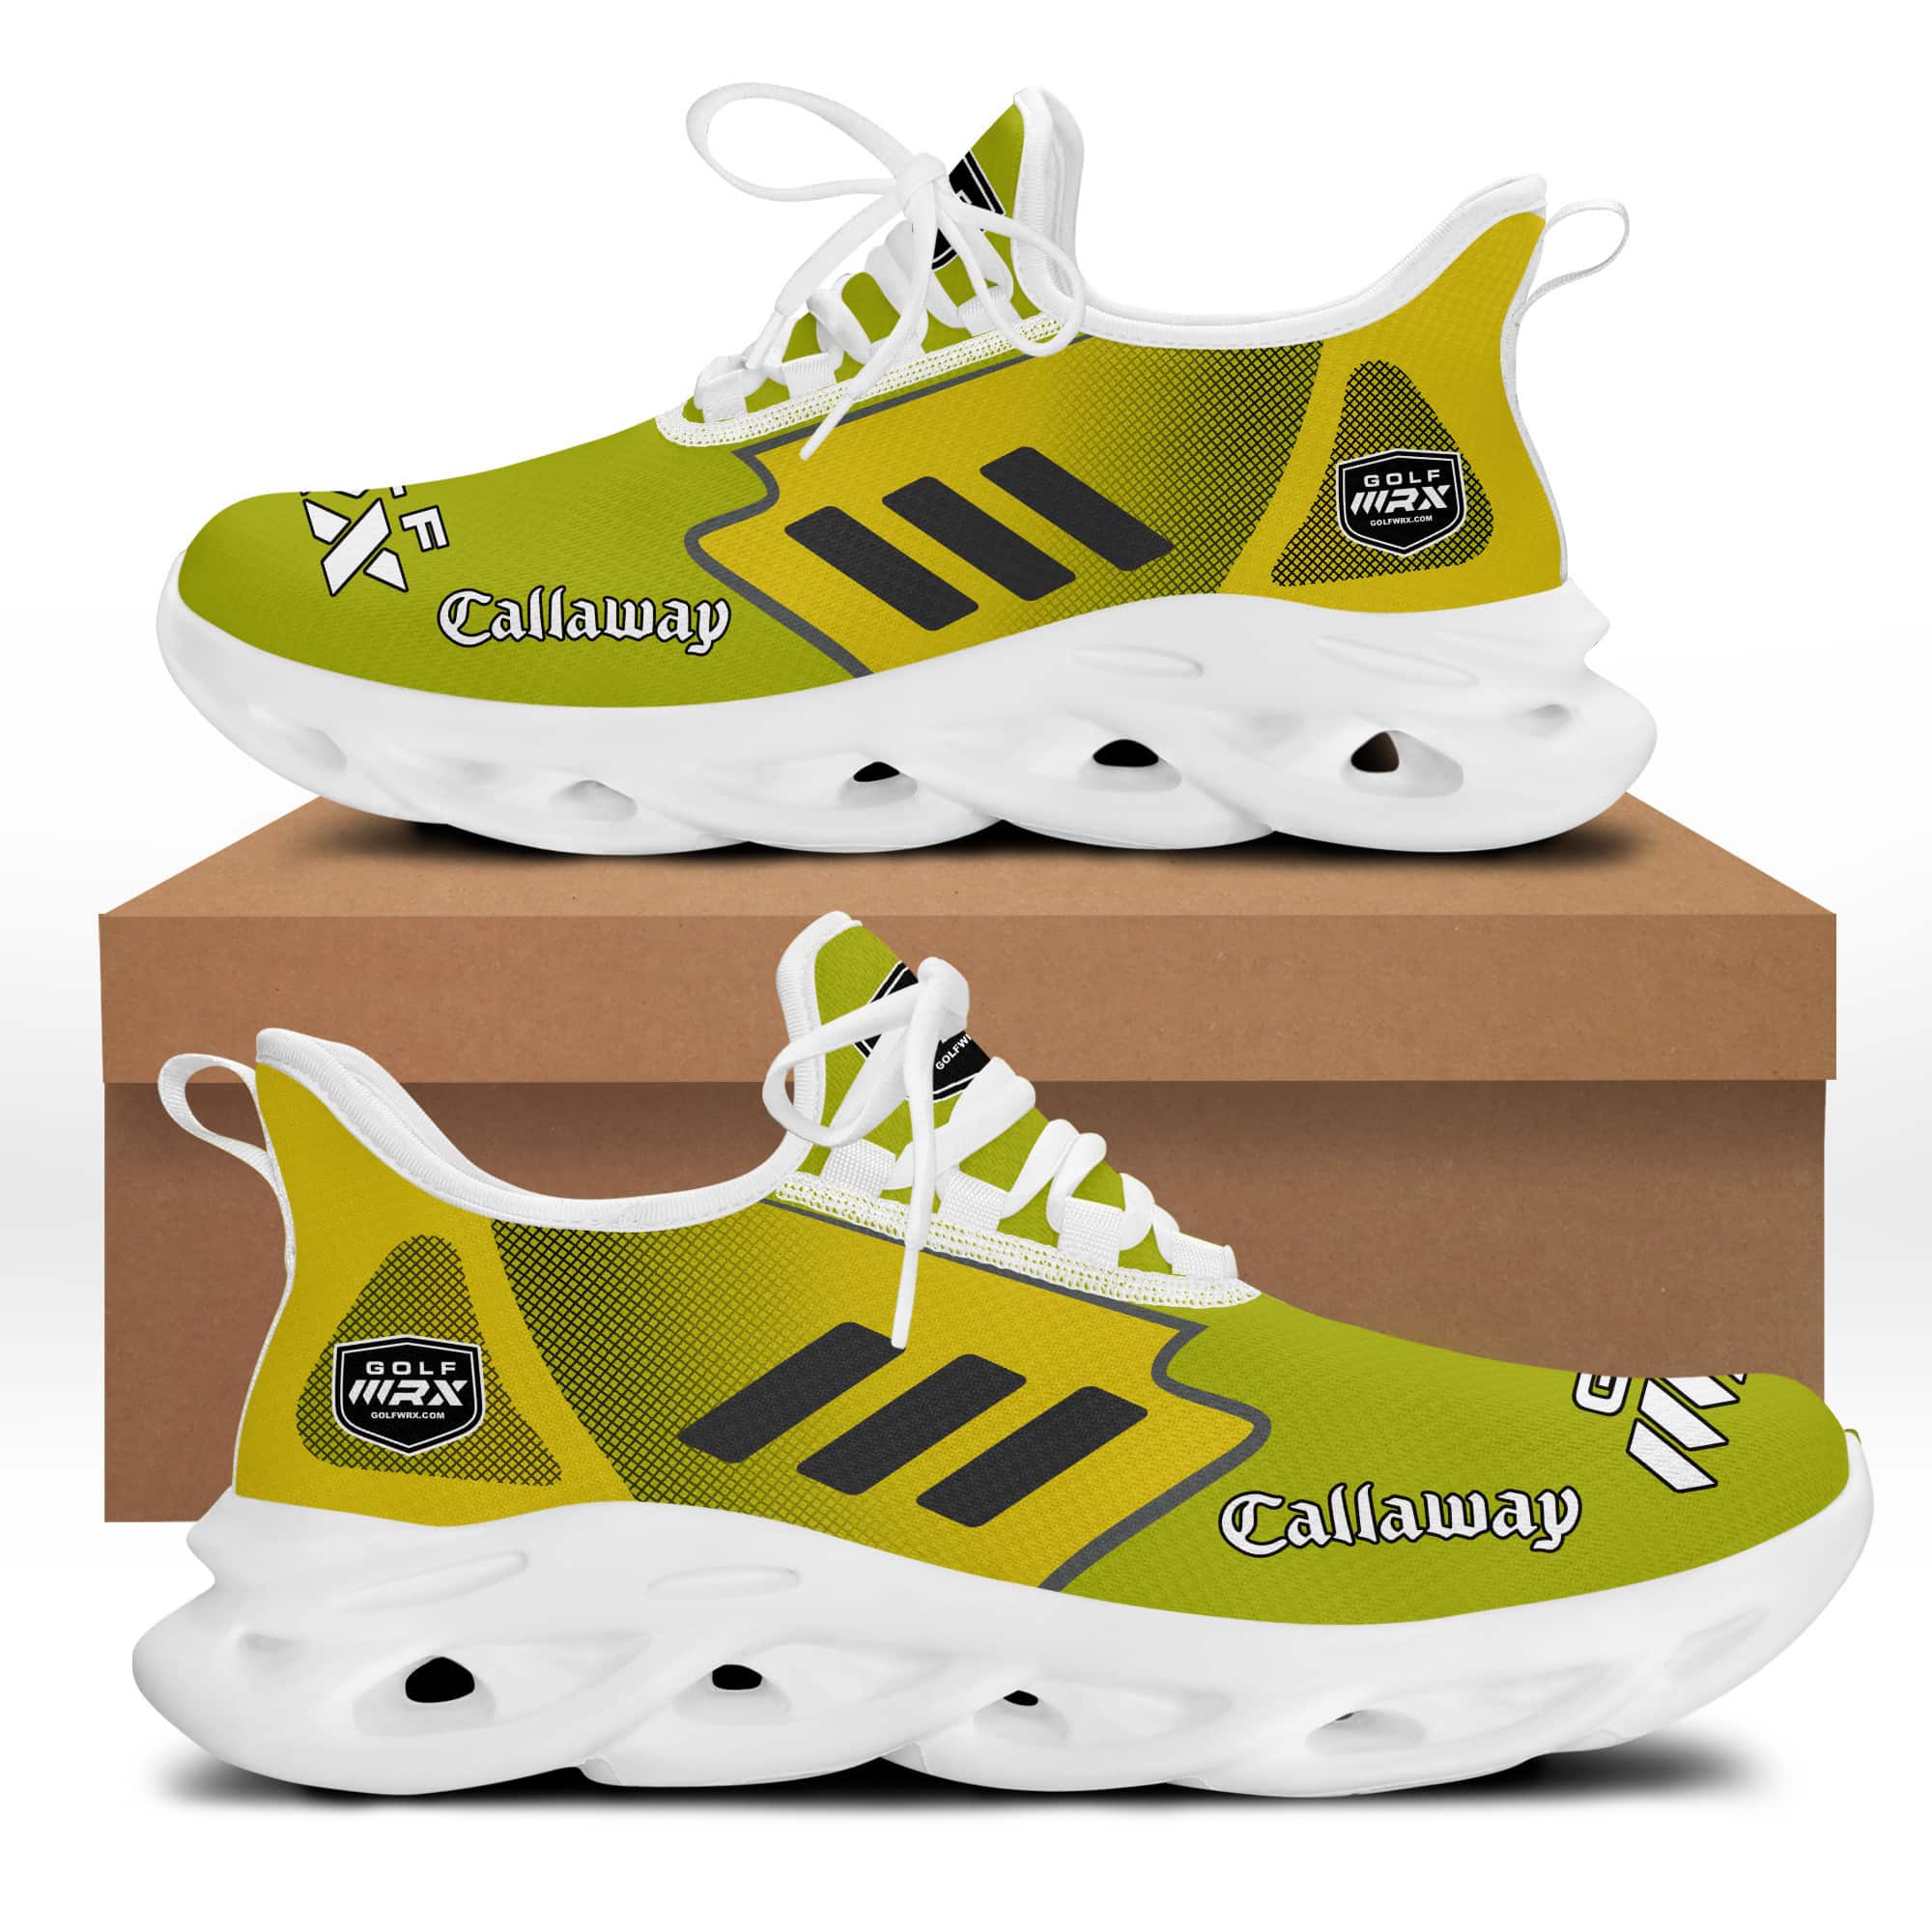 Callaway Golf Wrx Running-Shoes V01 2